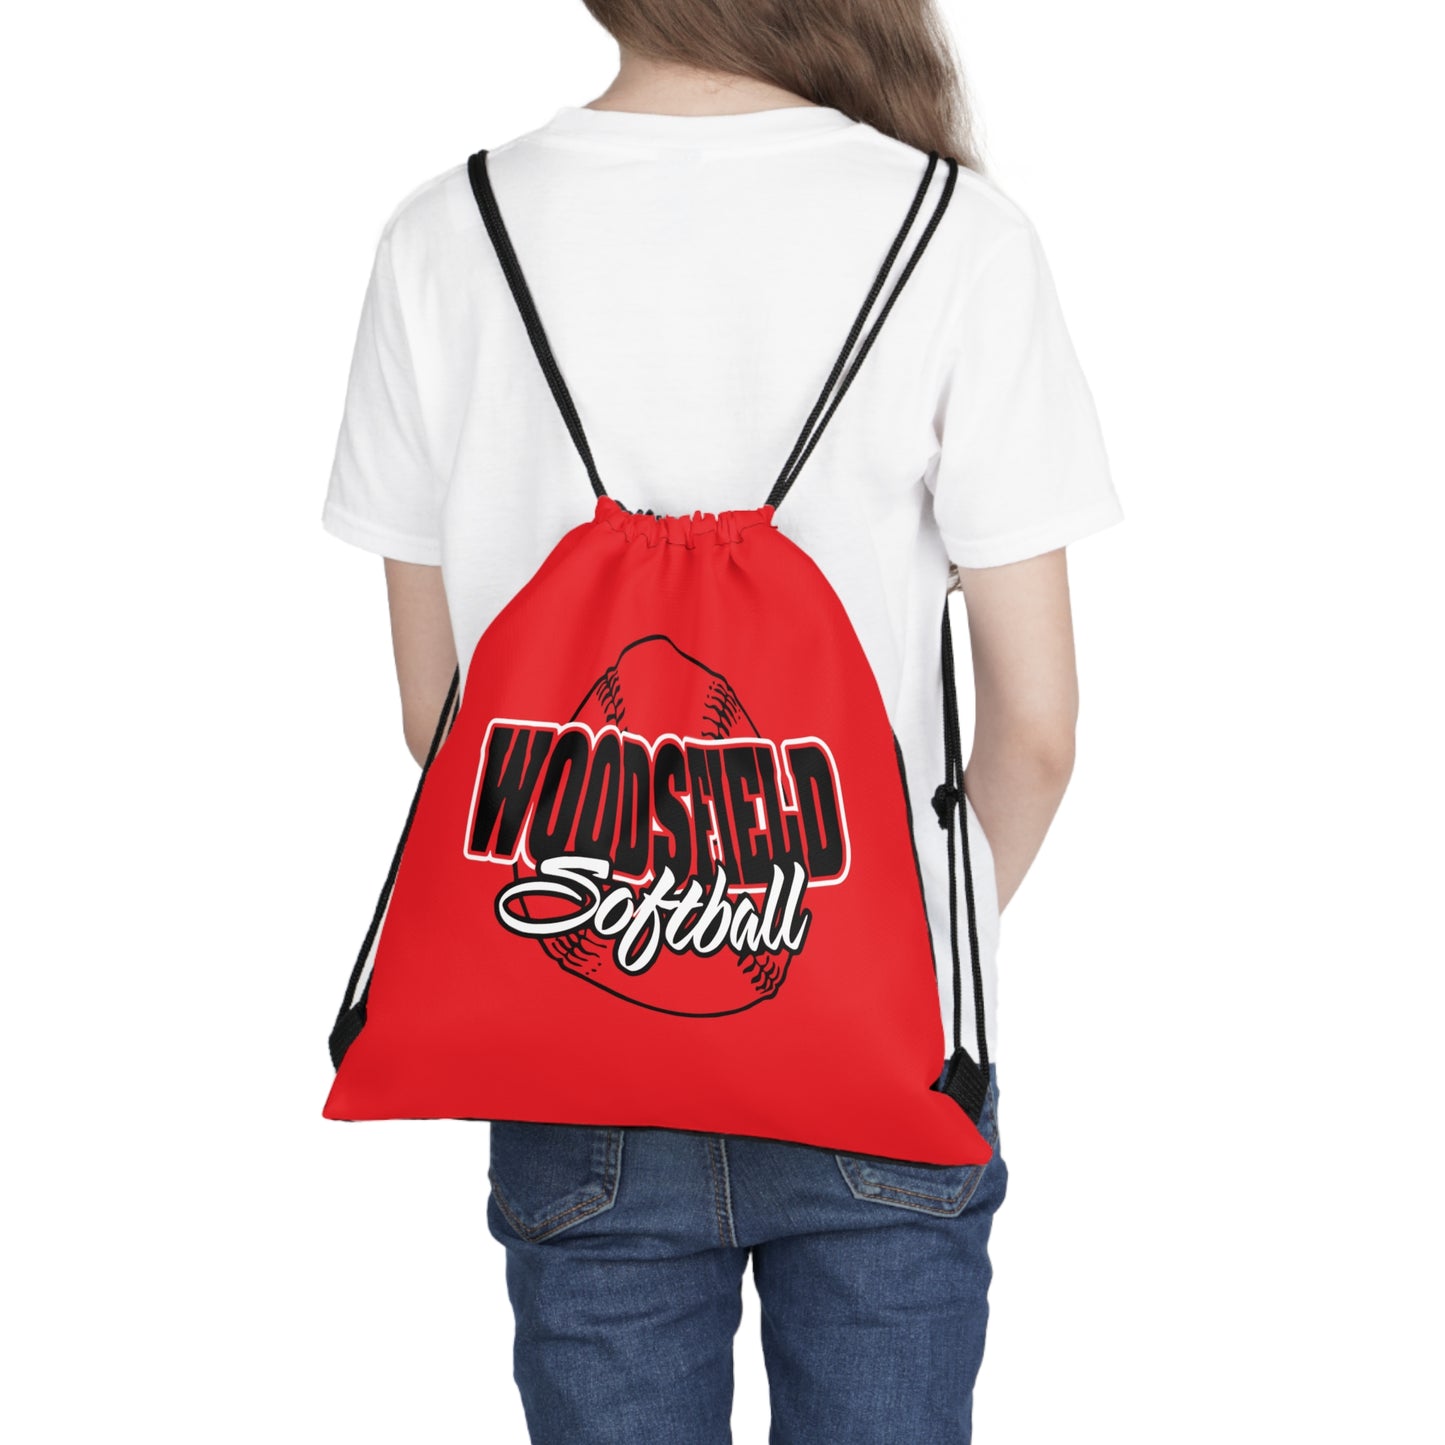 Outdoor Drawstring Bag - Wdsf. Softball